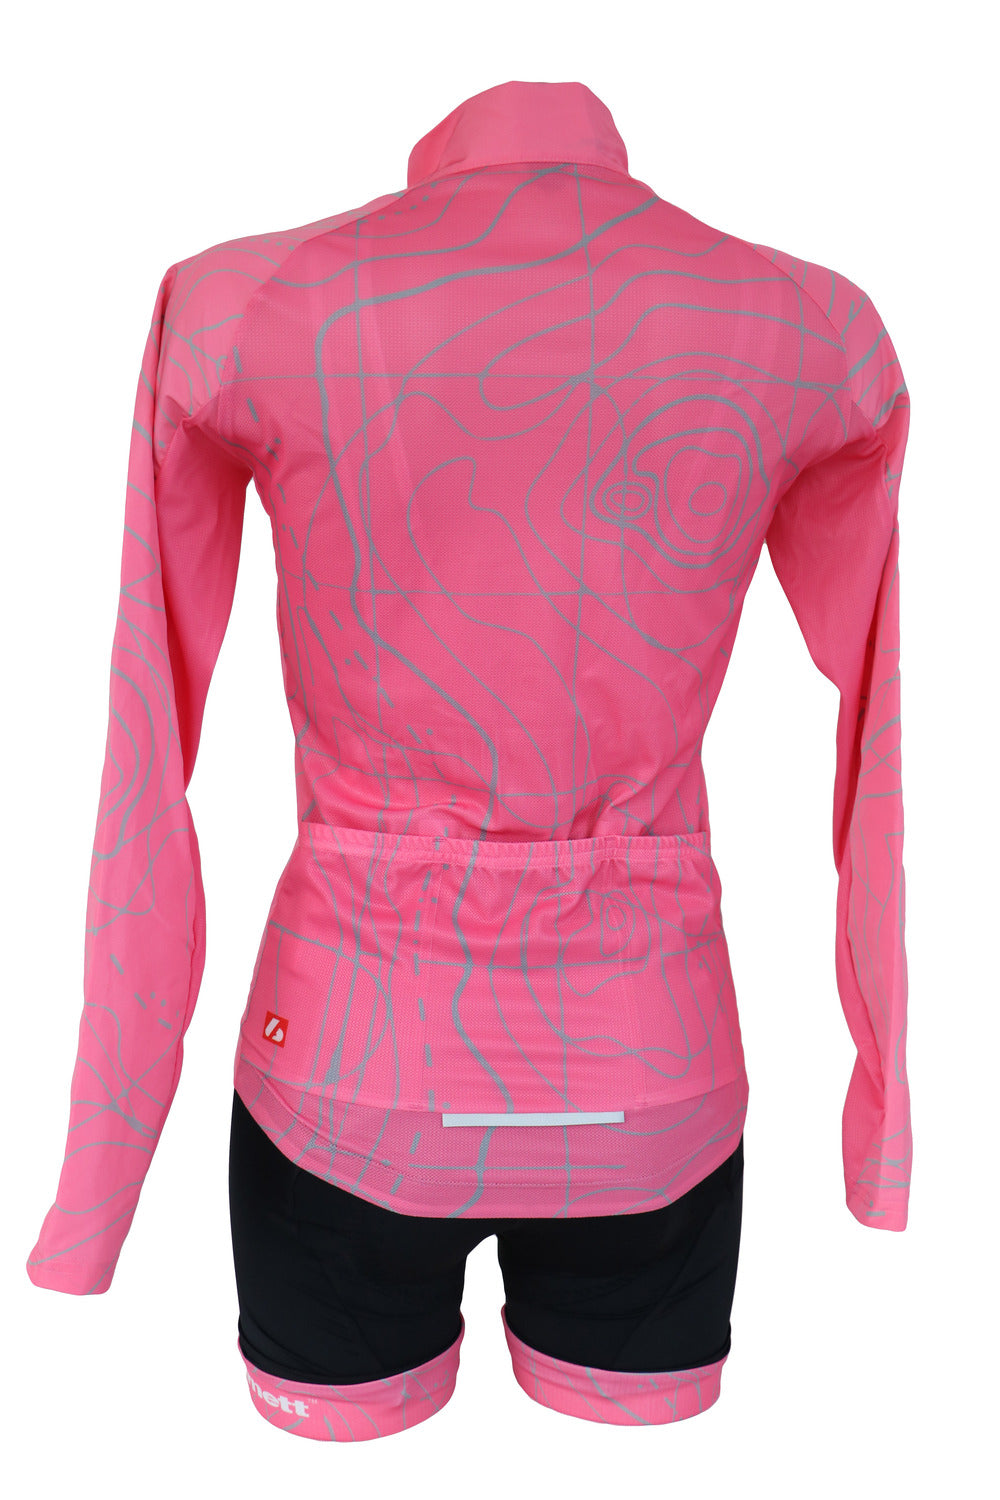 Bike textile - long-sleeved jacket, pink, windbreaker